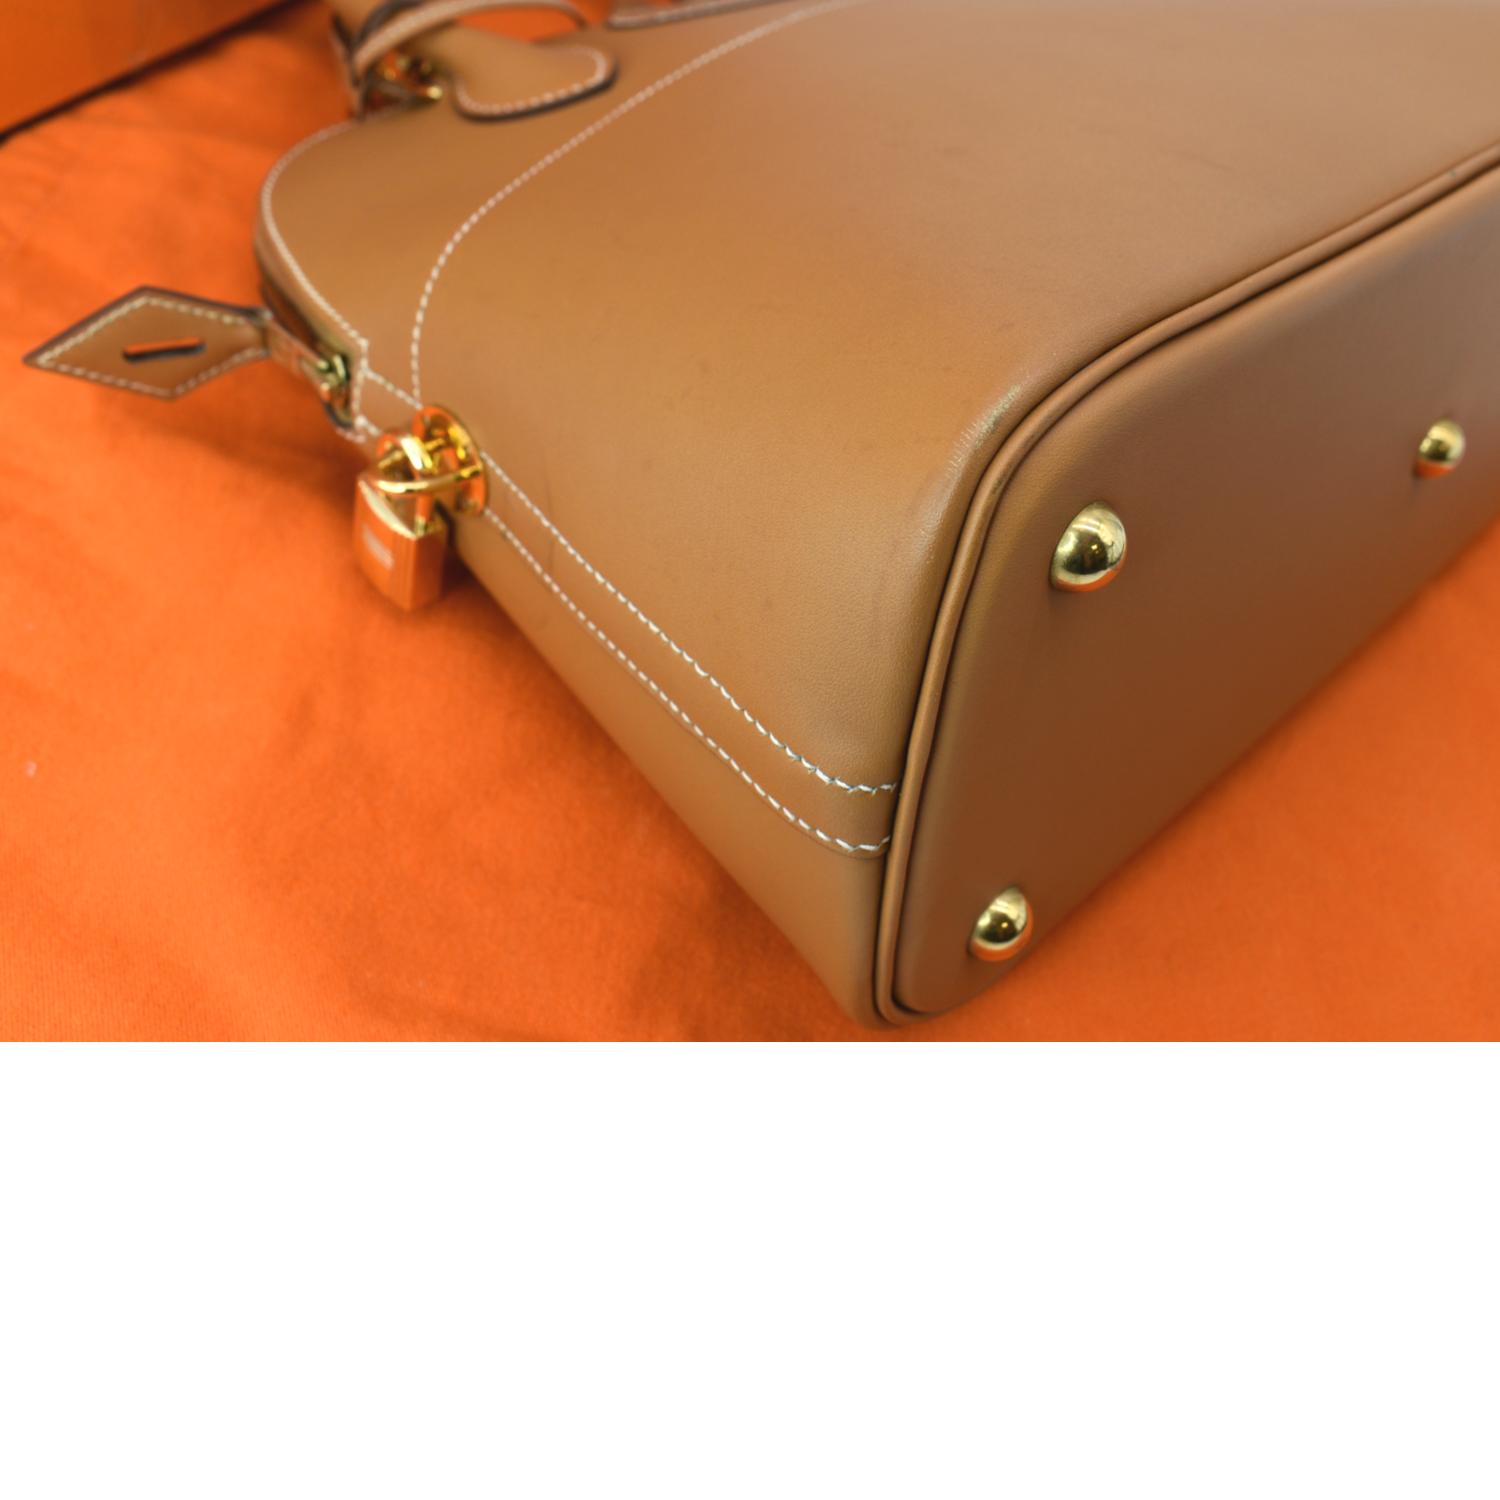 HERMES Box Leather Bolide 27 Orange 16461